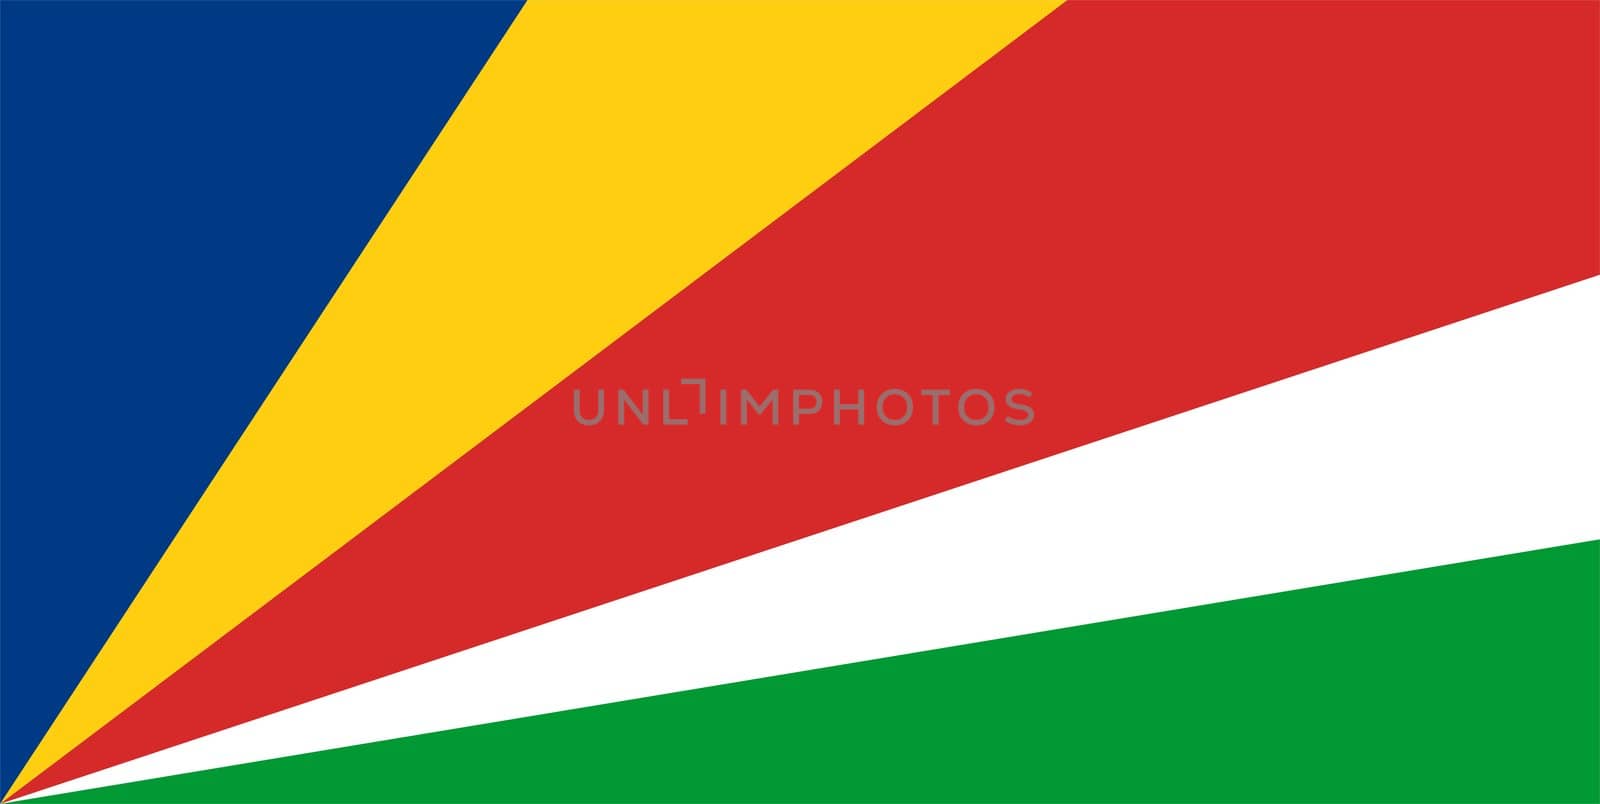 2D illustration of the flag of Seychelles